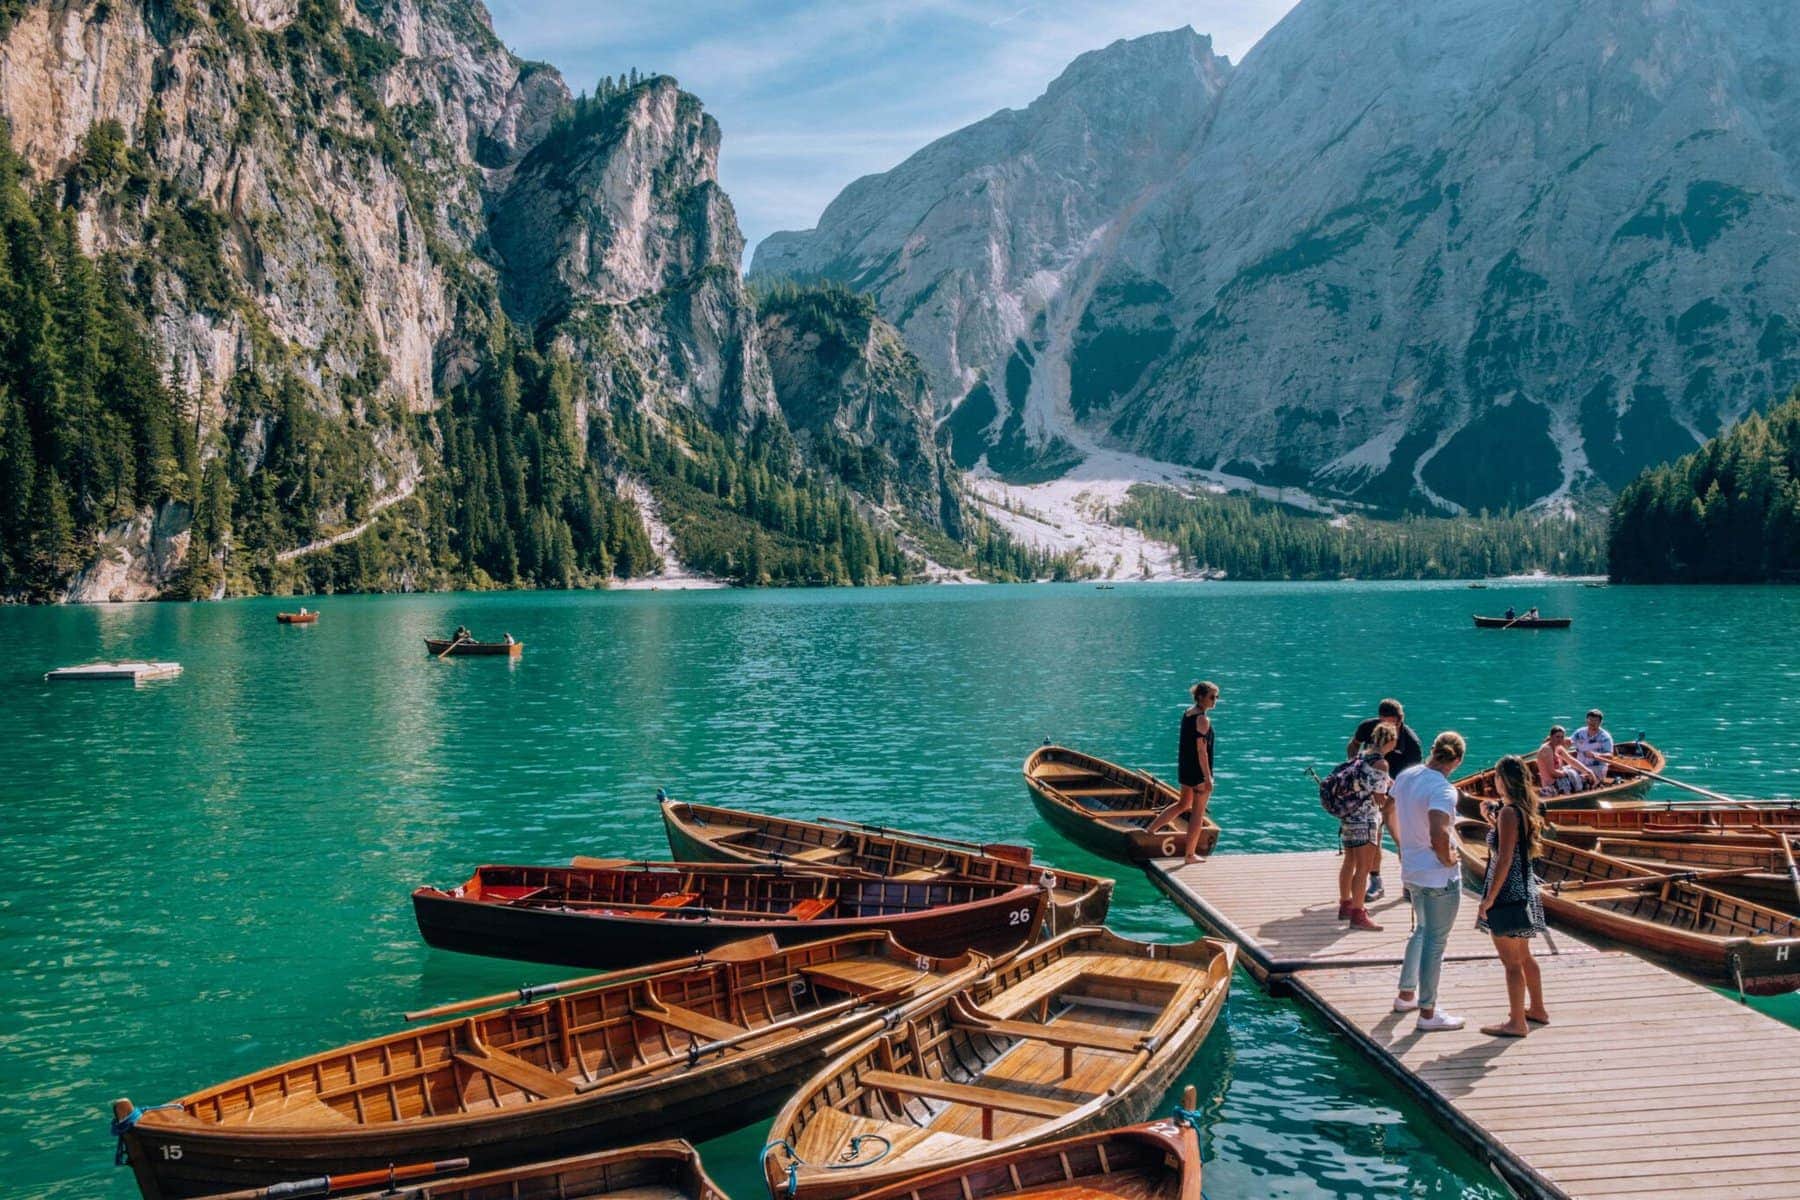 The most beautiful lake in Italy: the Lago di Brais